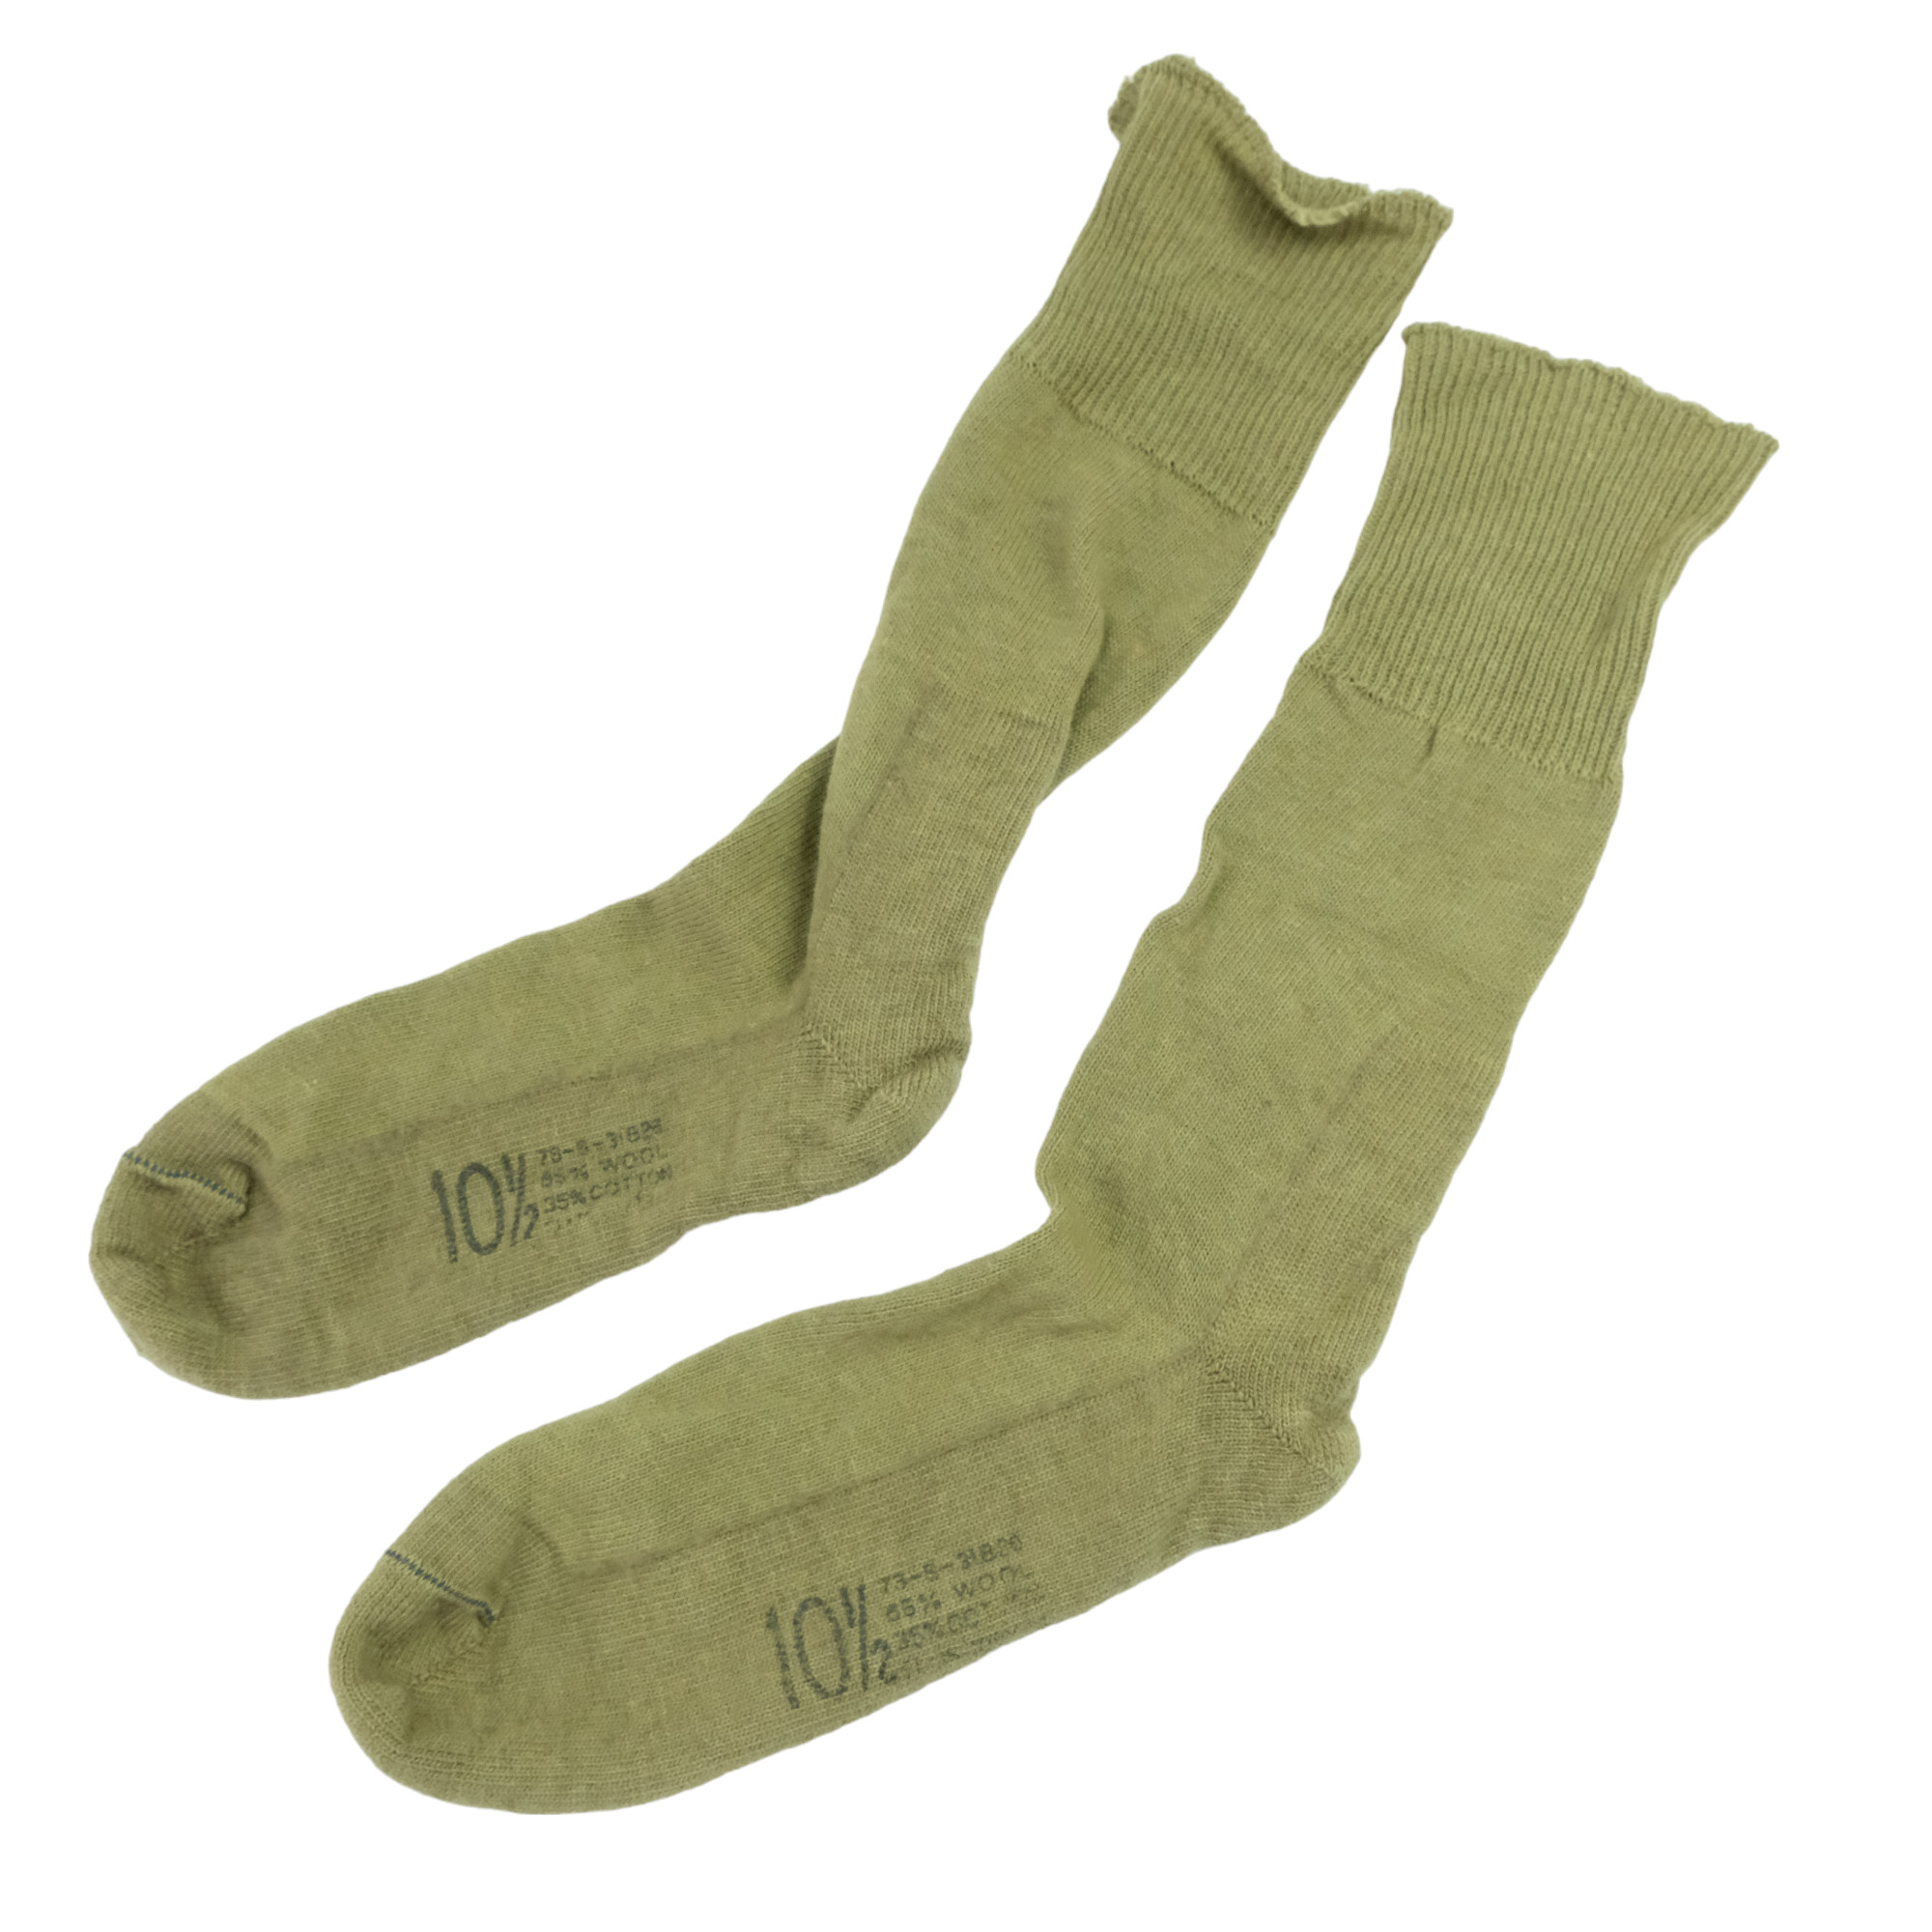 WWII US Army wool socks